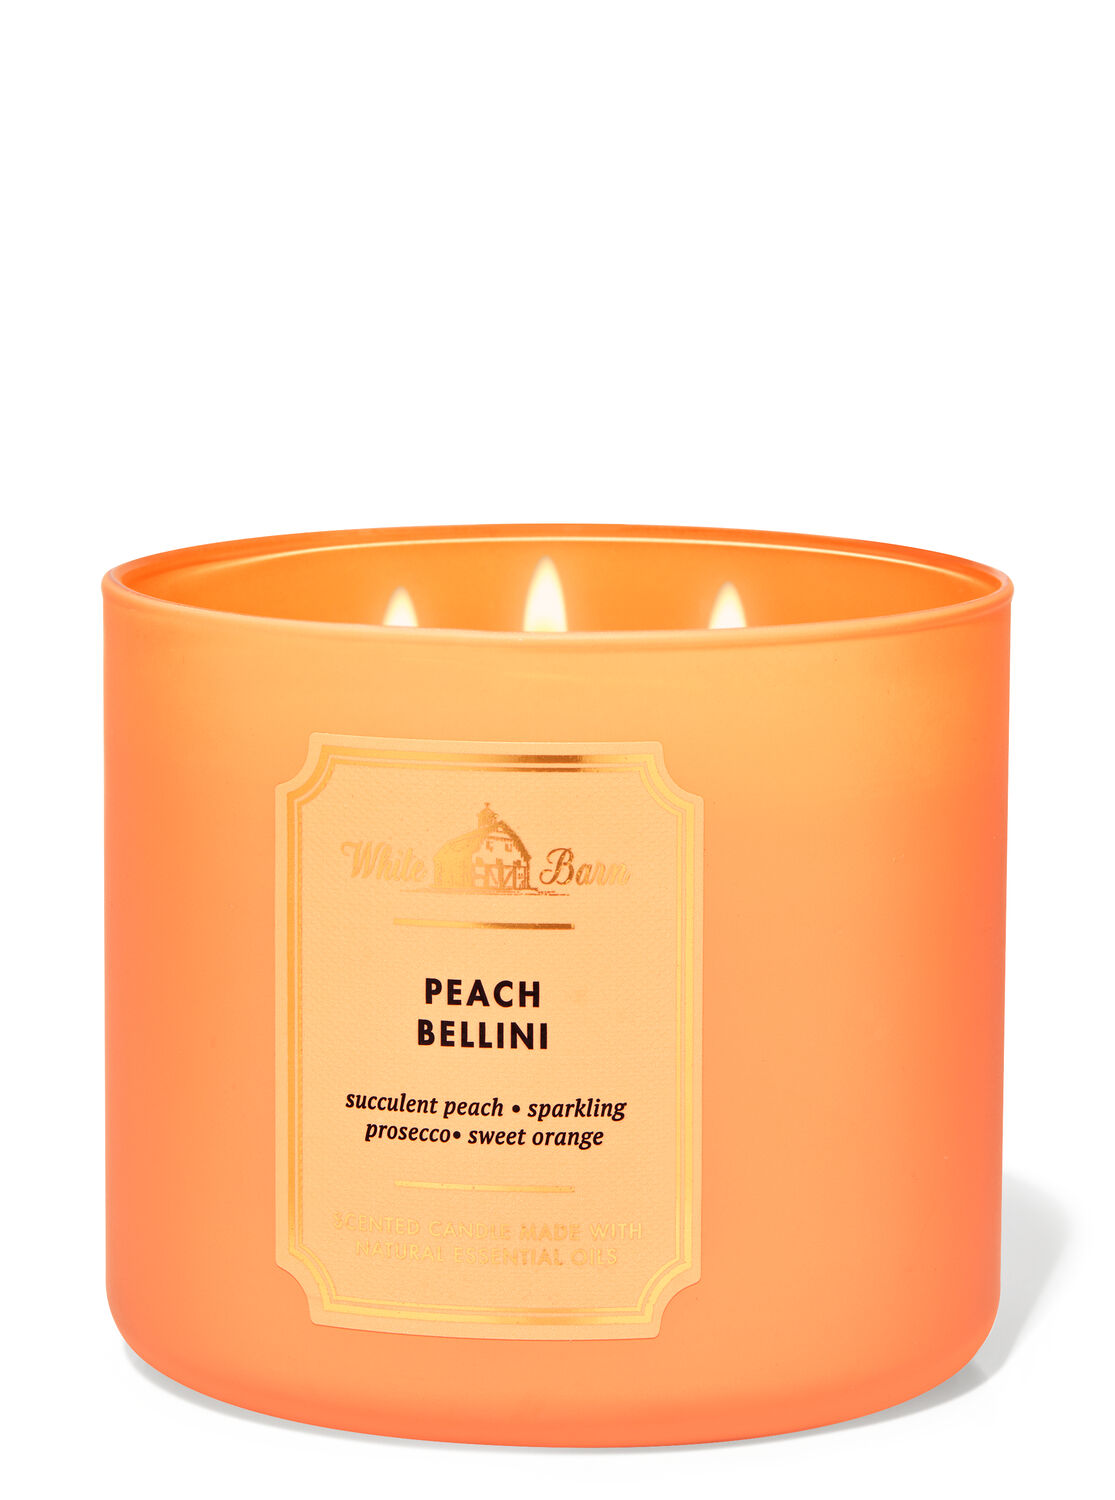 Peach Bellini Large 3-Wick Candle 14.5 oz 1 Bath & Body Works CONGRATS 